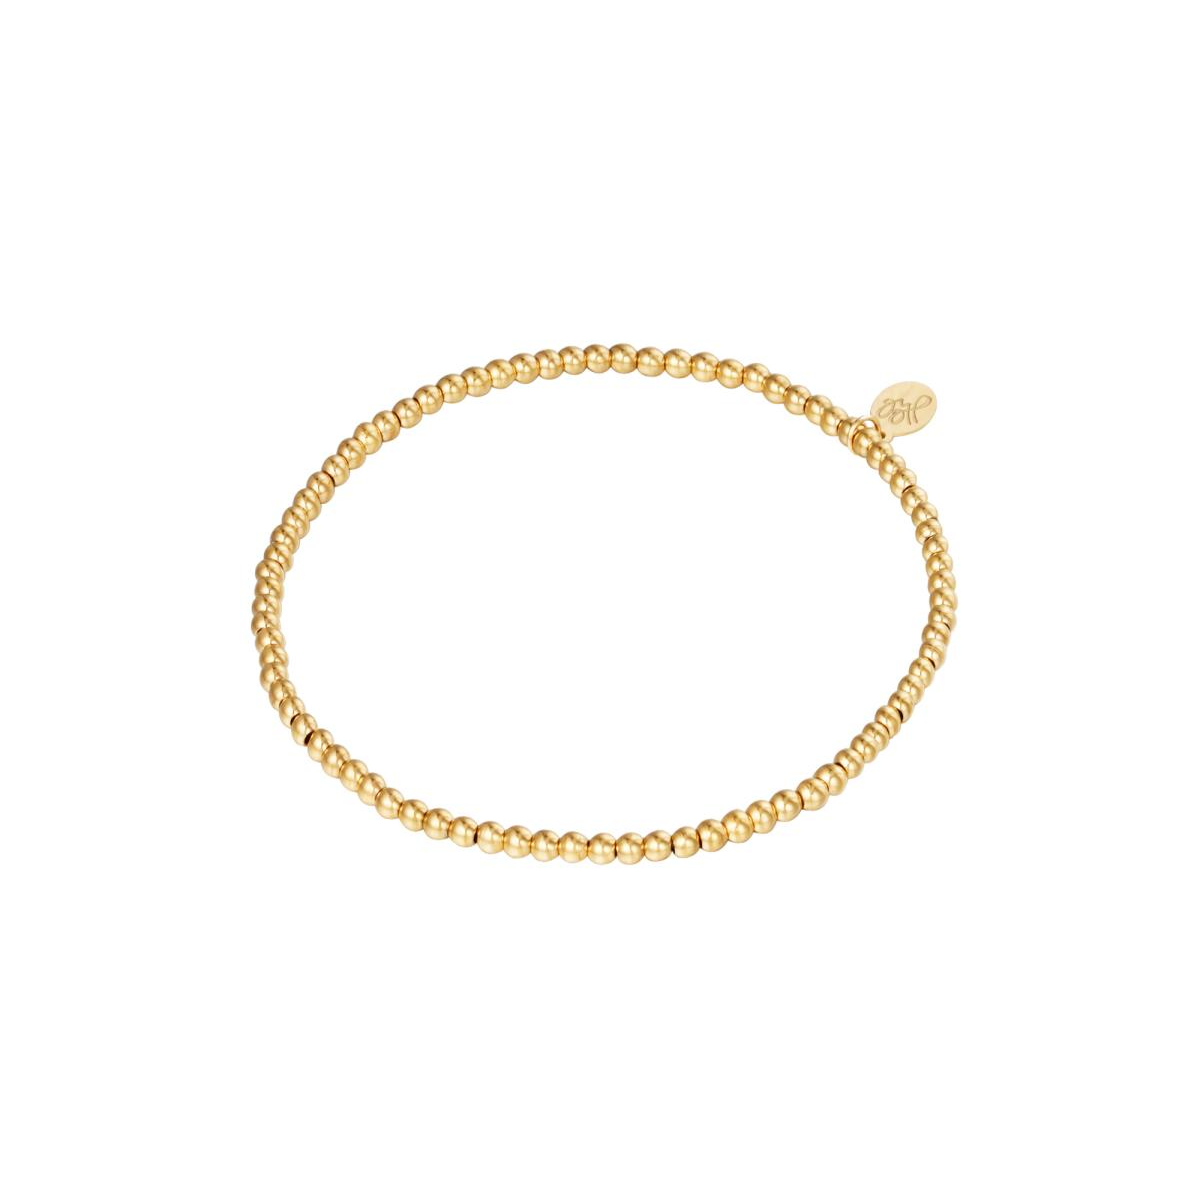 Edelstahl - Armband kleine Perlen Gold Edelstahl - 2,5mm